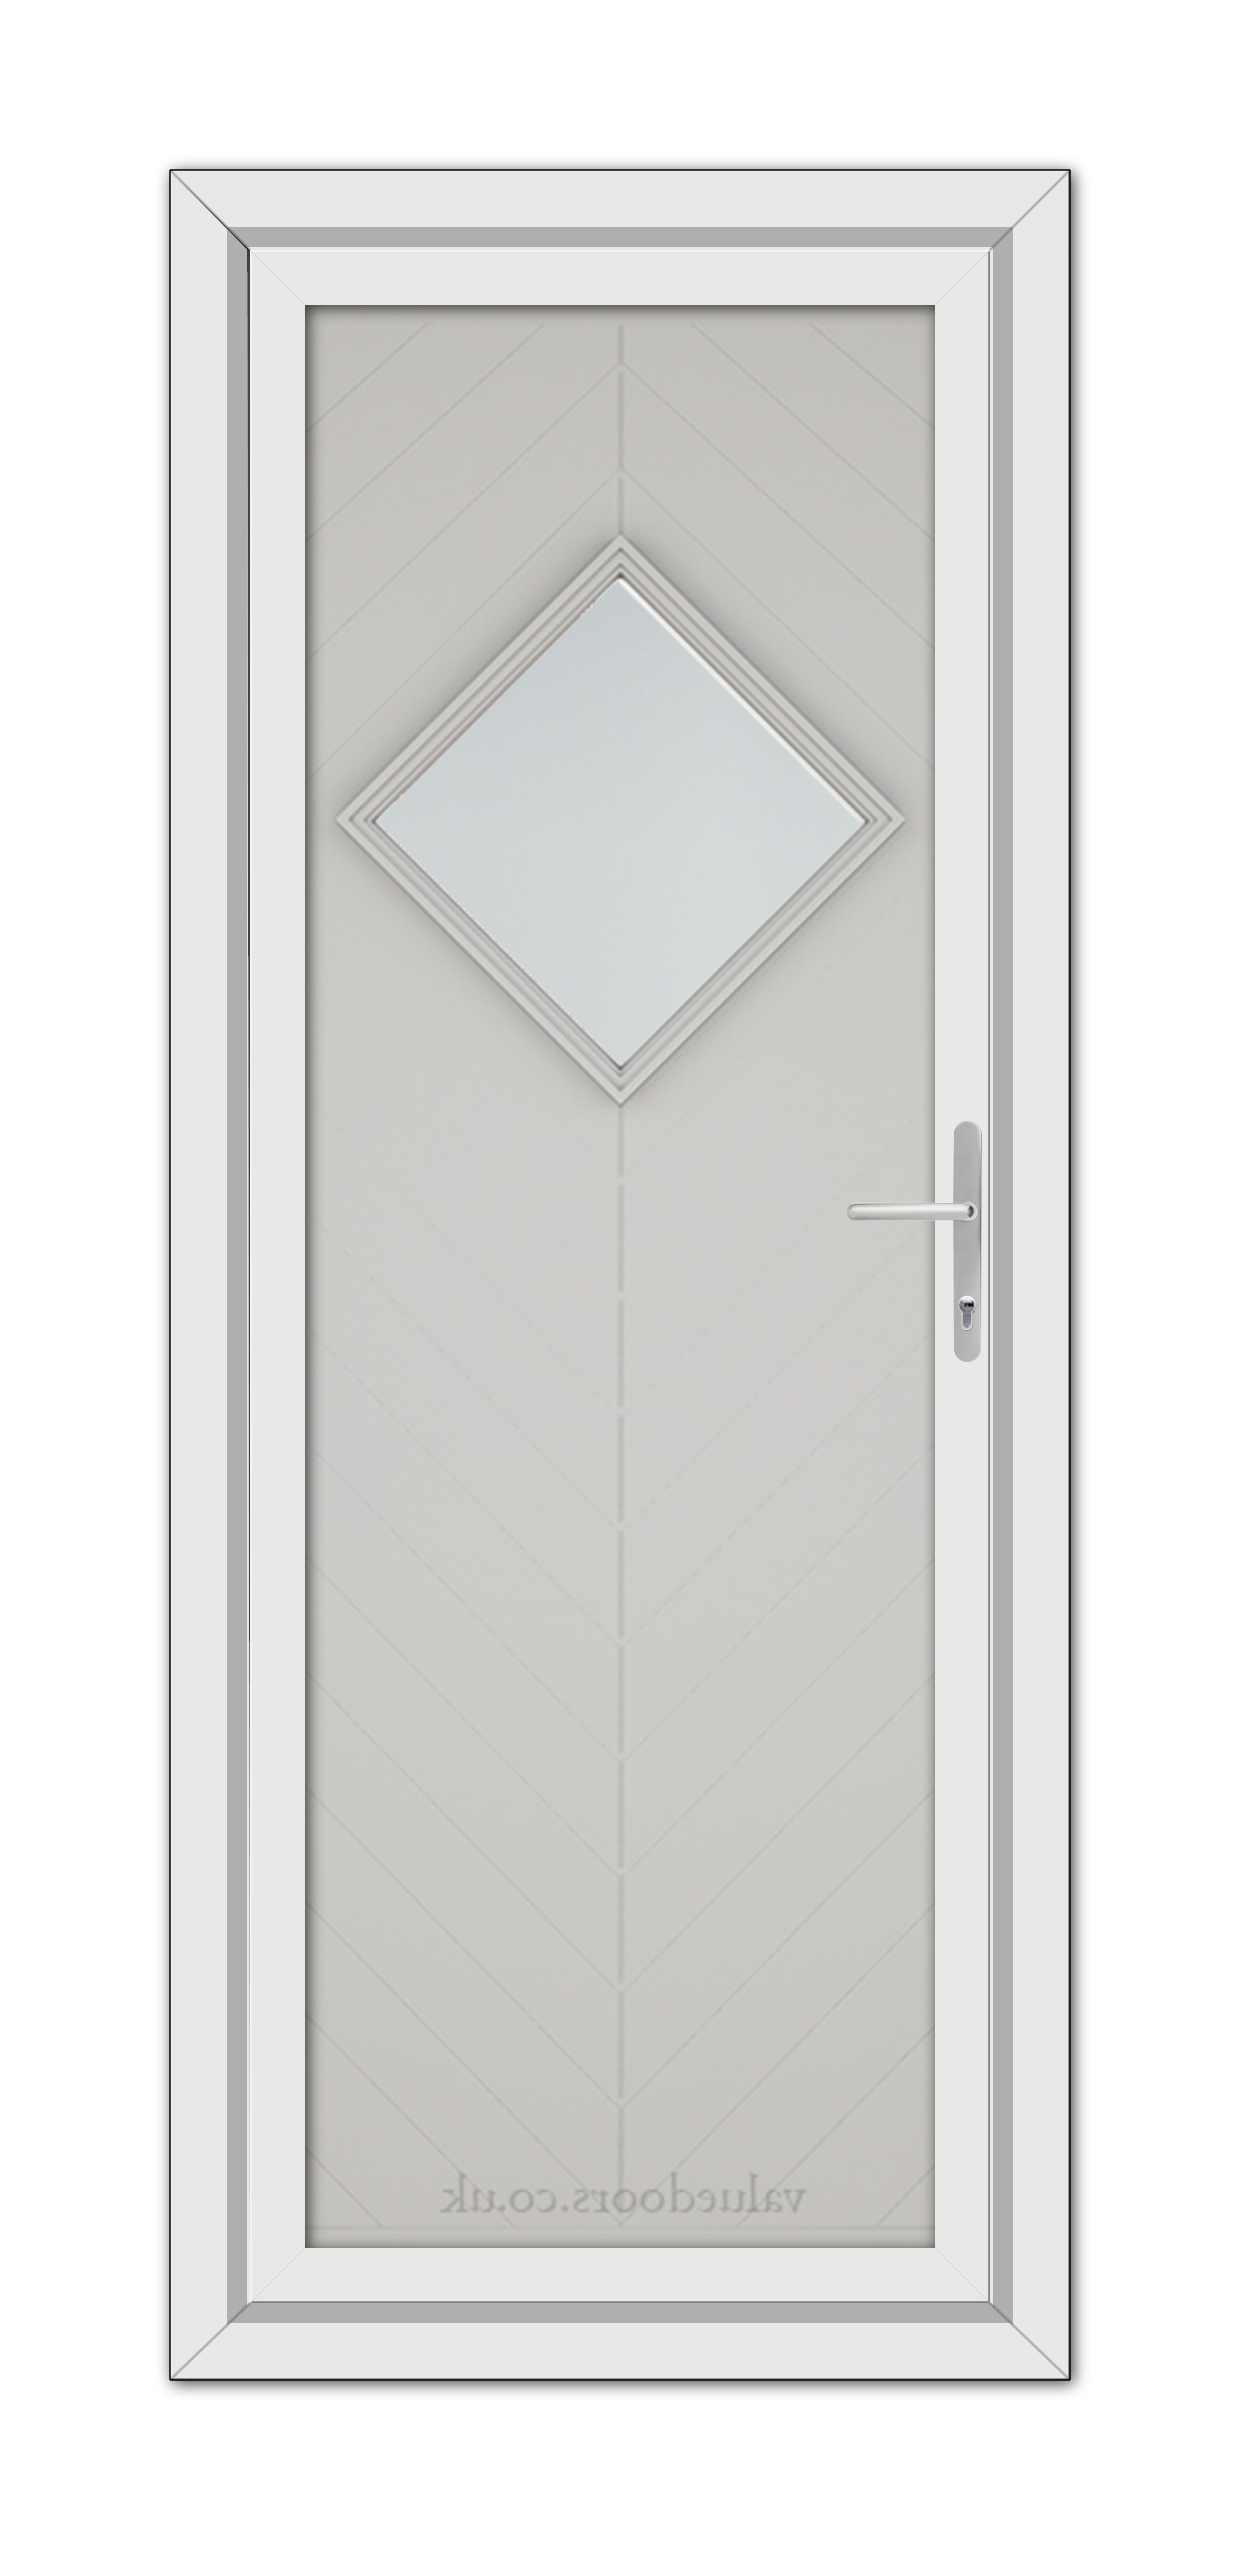 A Silver Grey Hamburg uPVC door with a diamond shaped window.